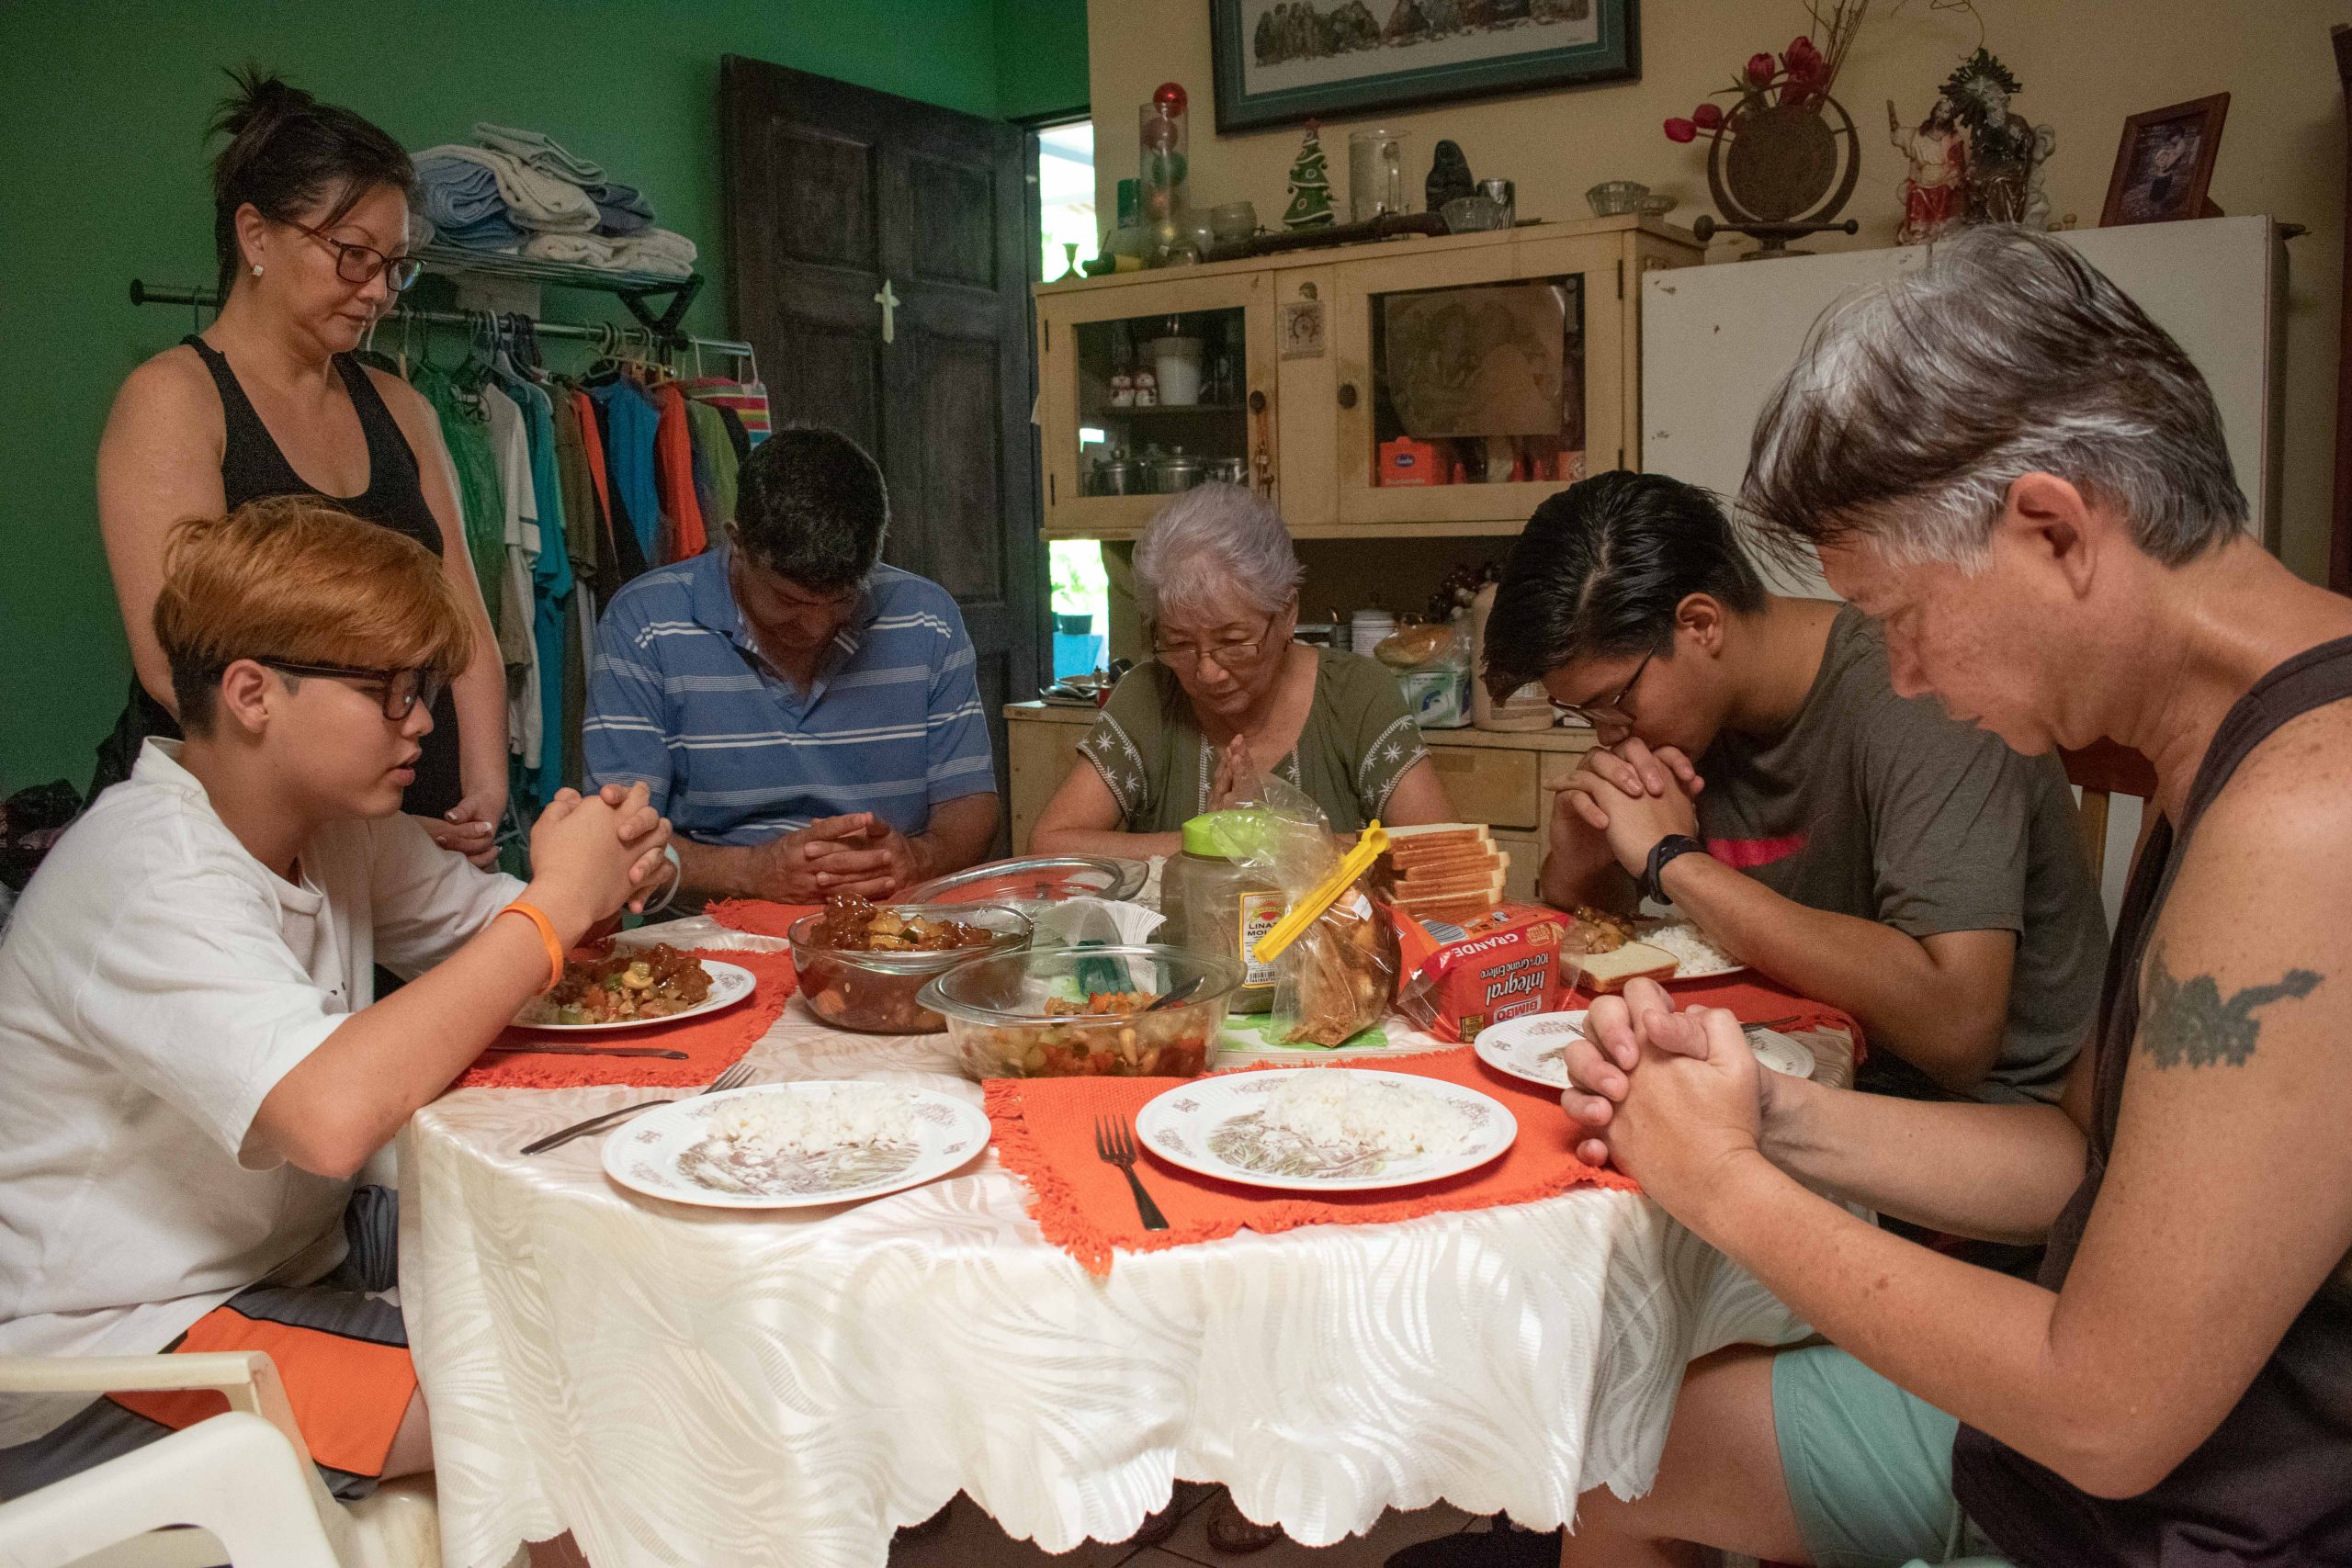 The SÃ¡nchez Li family saying grace before eating, 2018